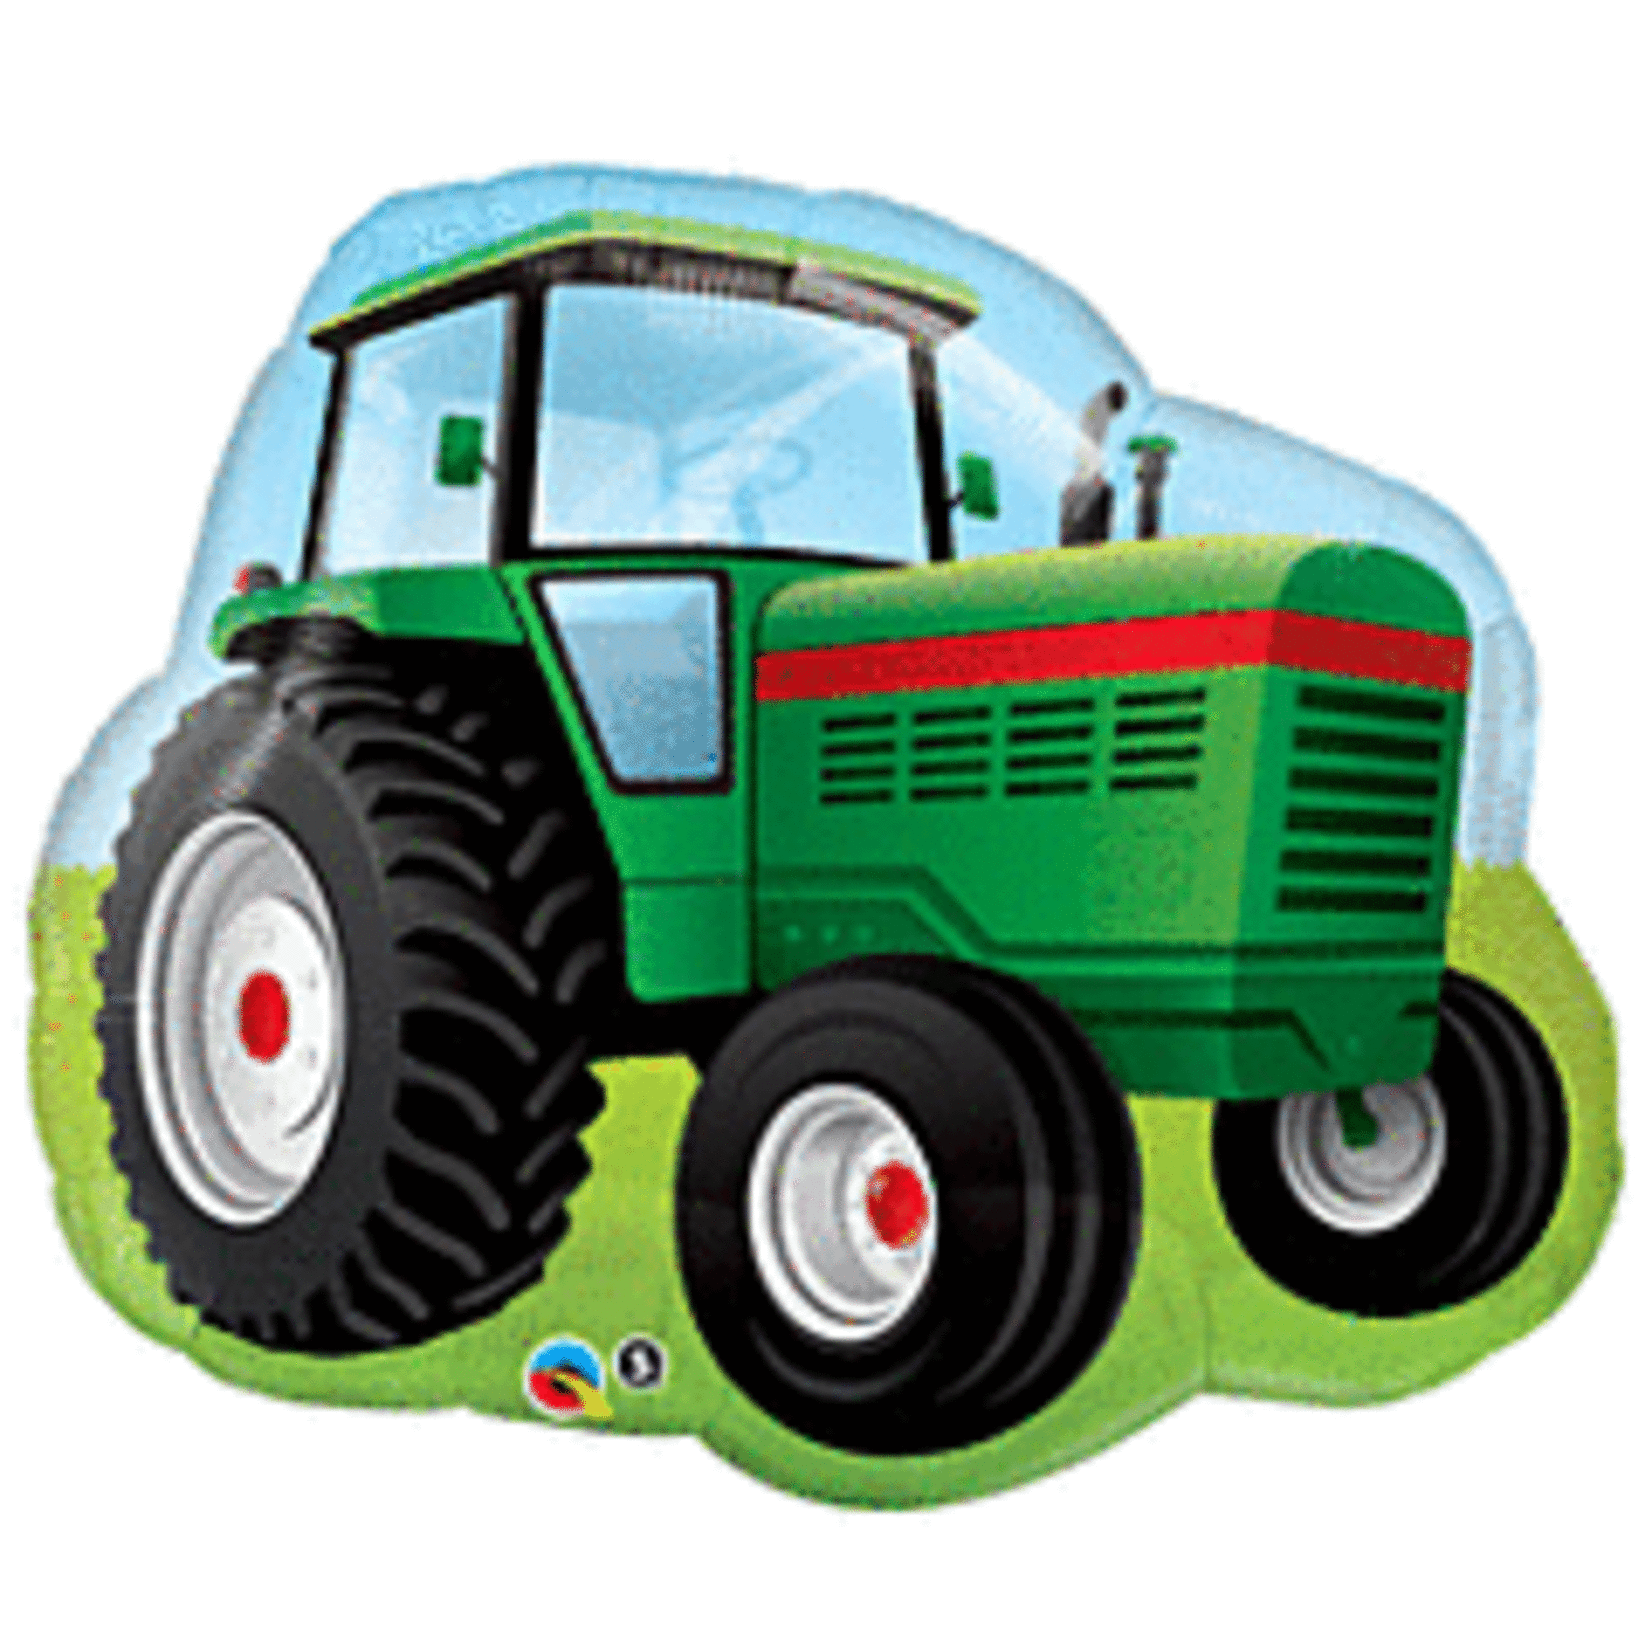 34" Farm Tractor Shape